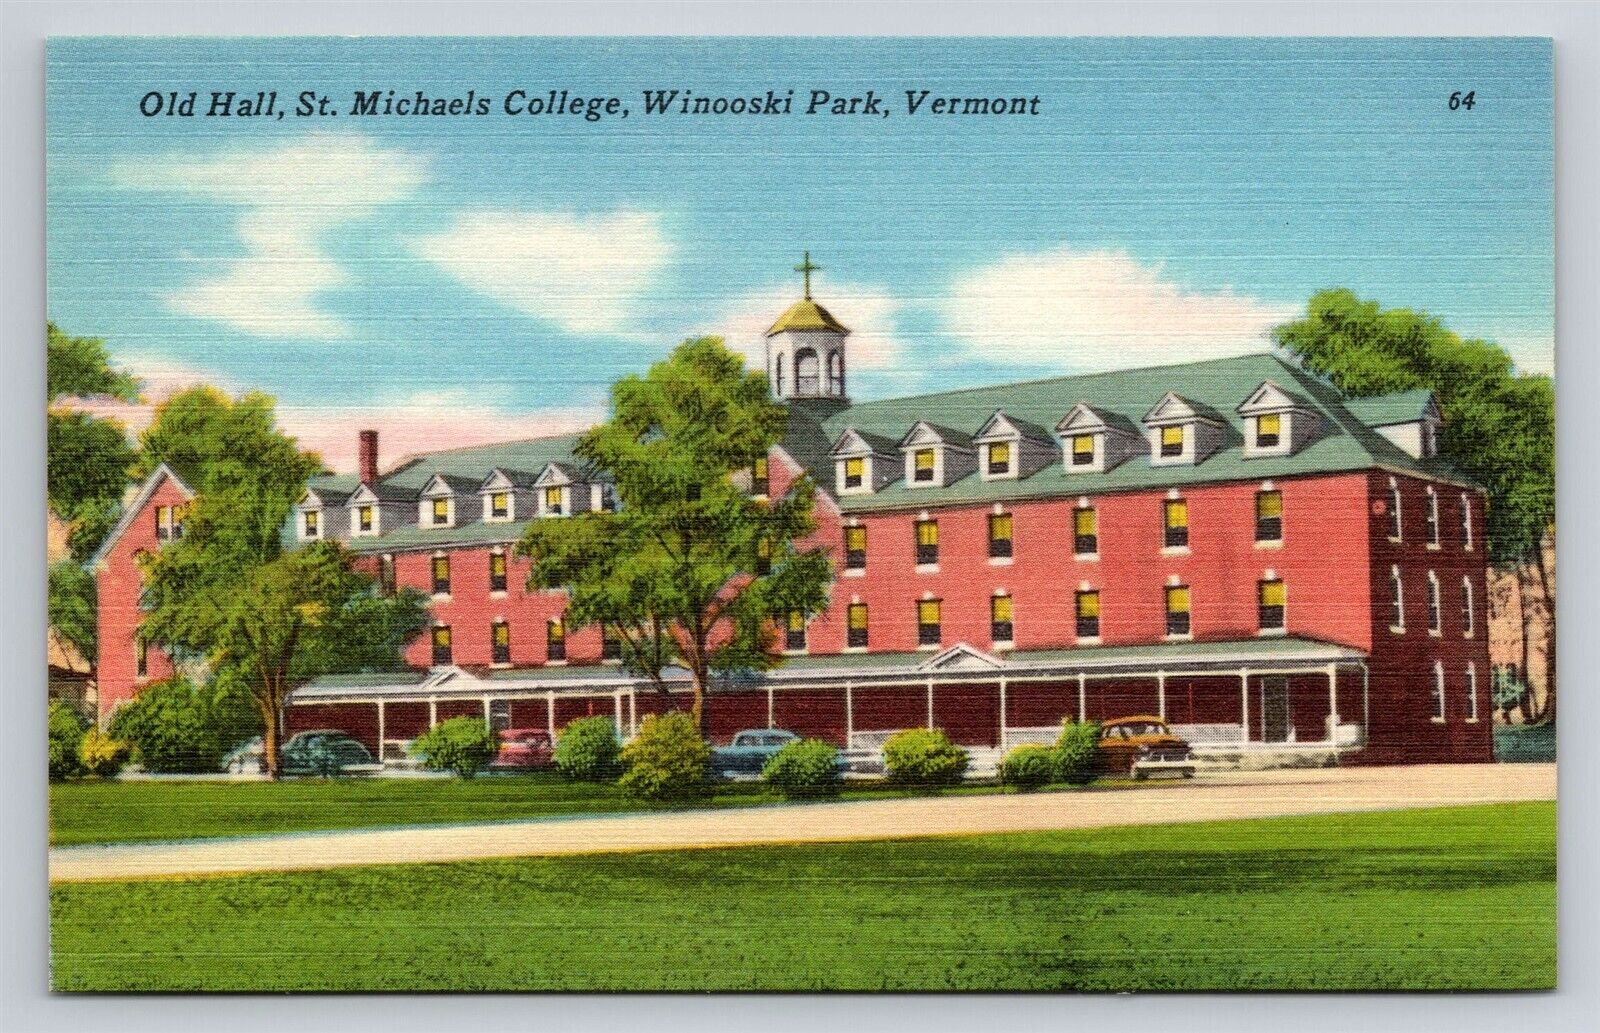 St. Michaels College Old Hall Winooski Park Vermont VT Vintage Postcard View UNP